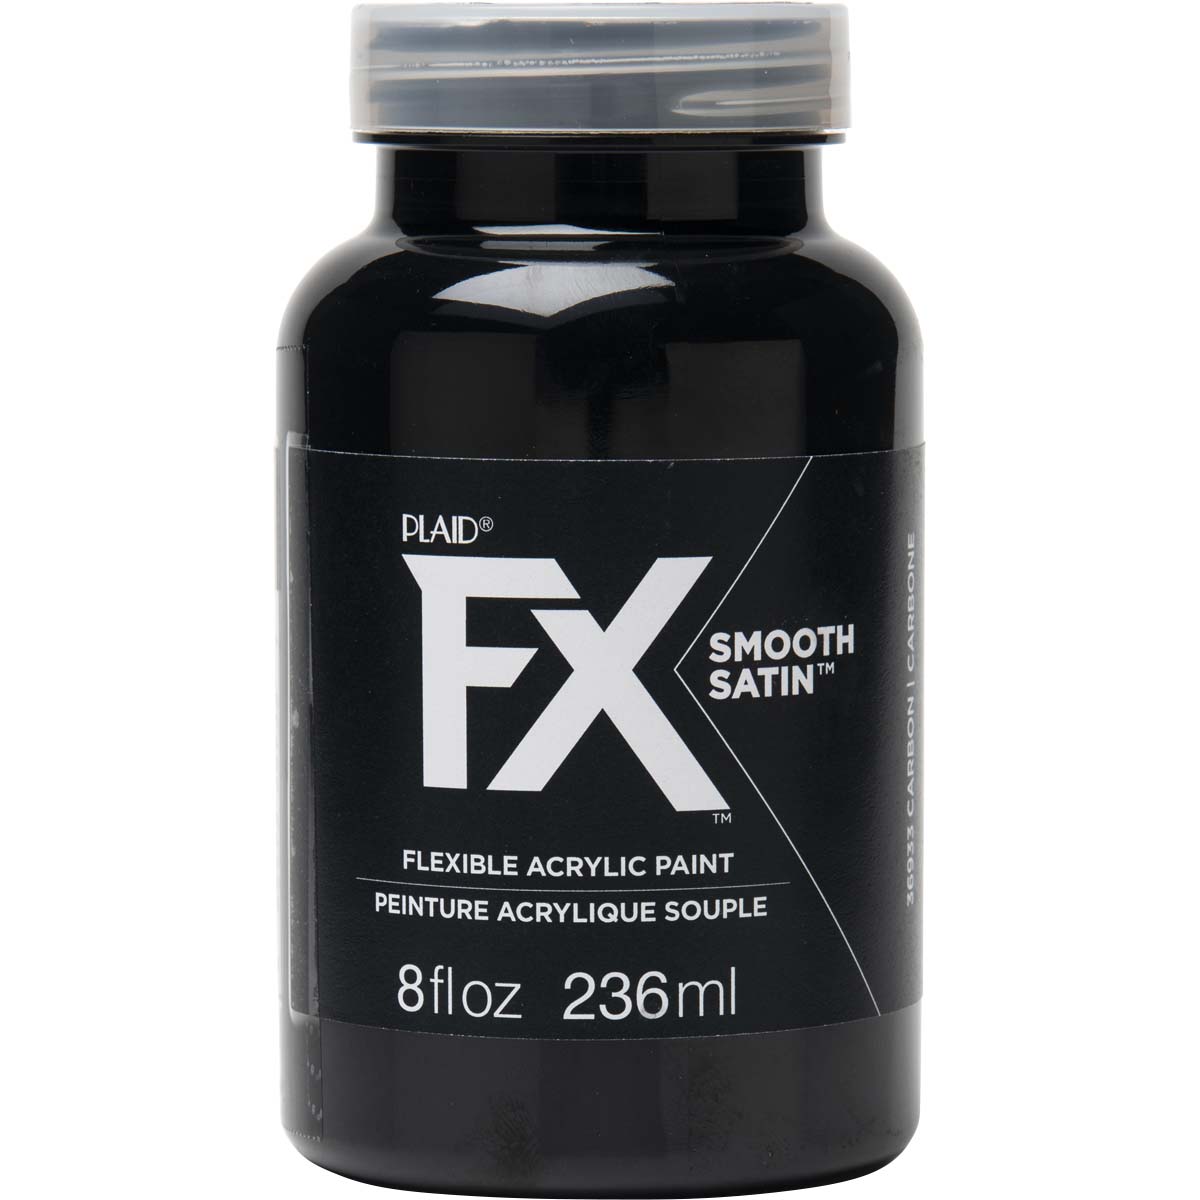 PlaidFX Smooth Satin Flexible Acrylic Paint - Carbon, 8 oz. - 36933